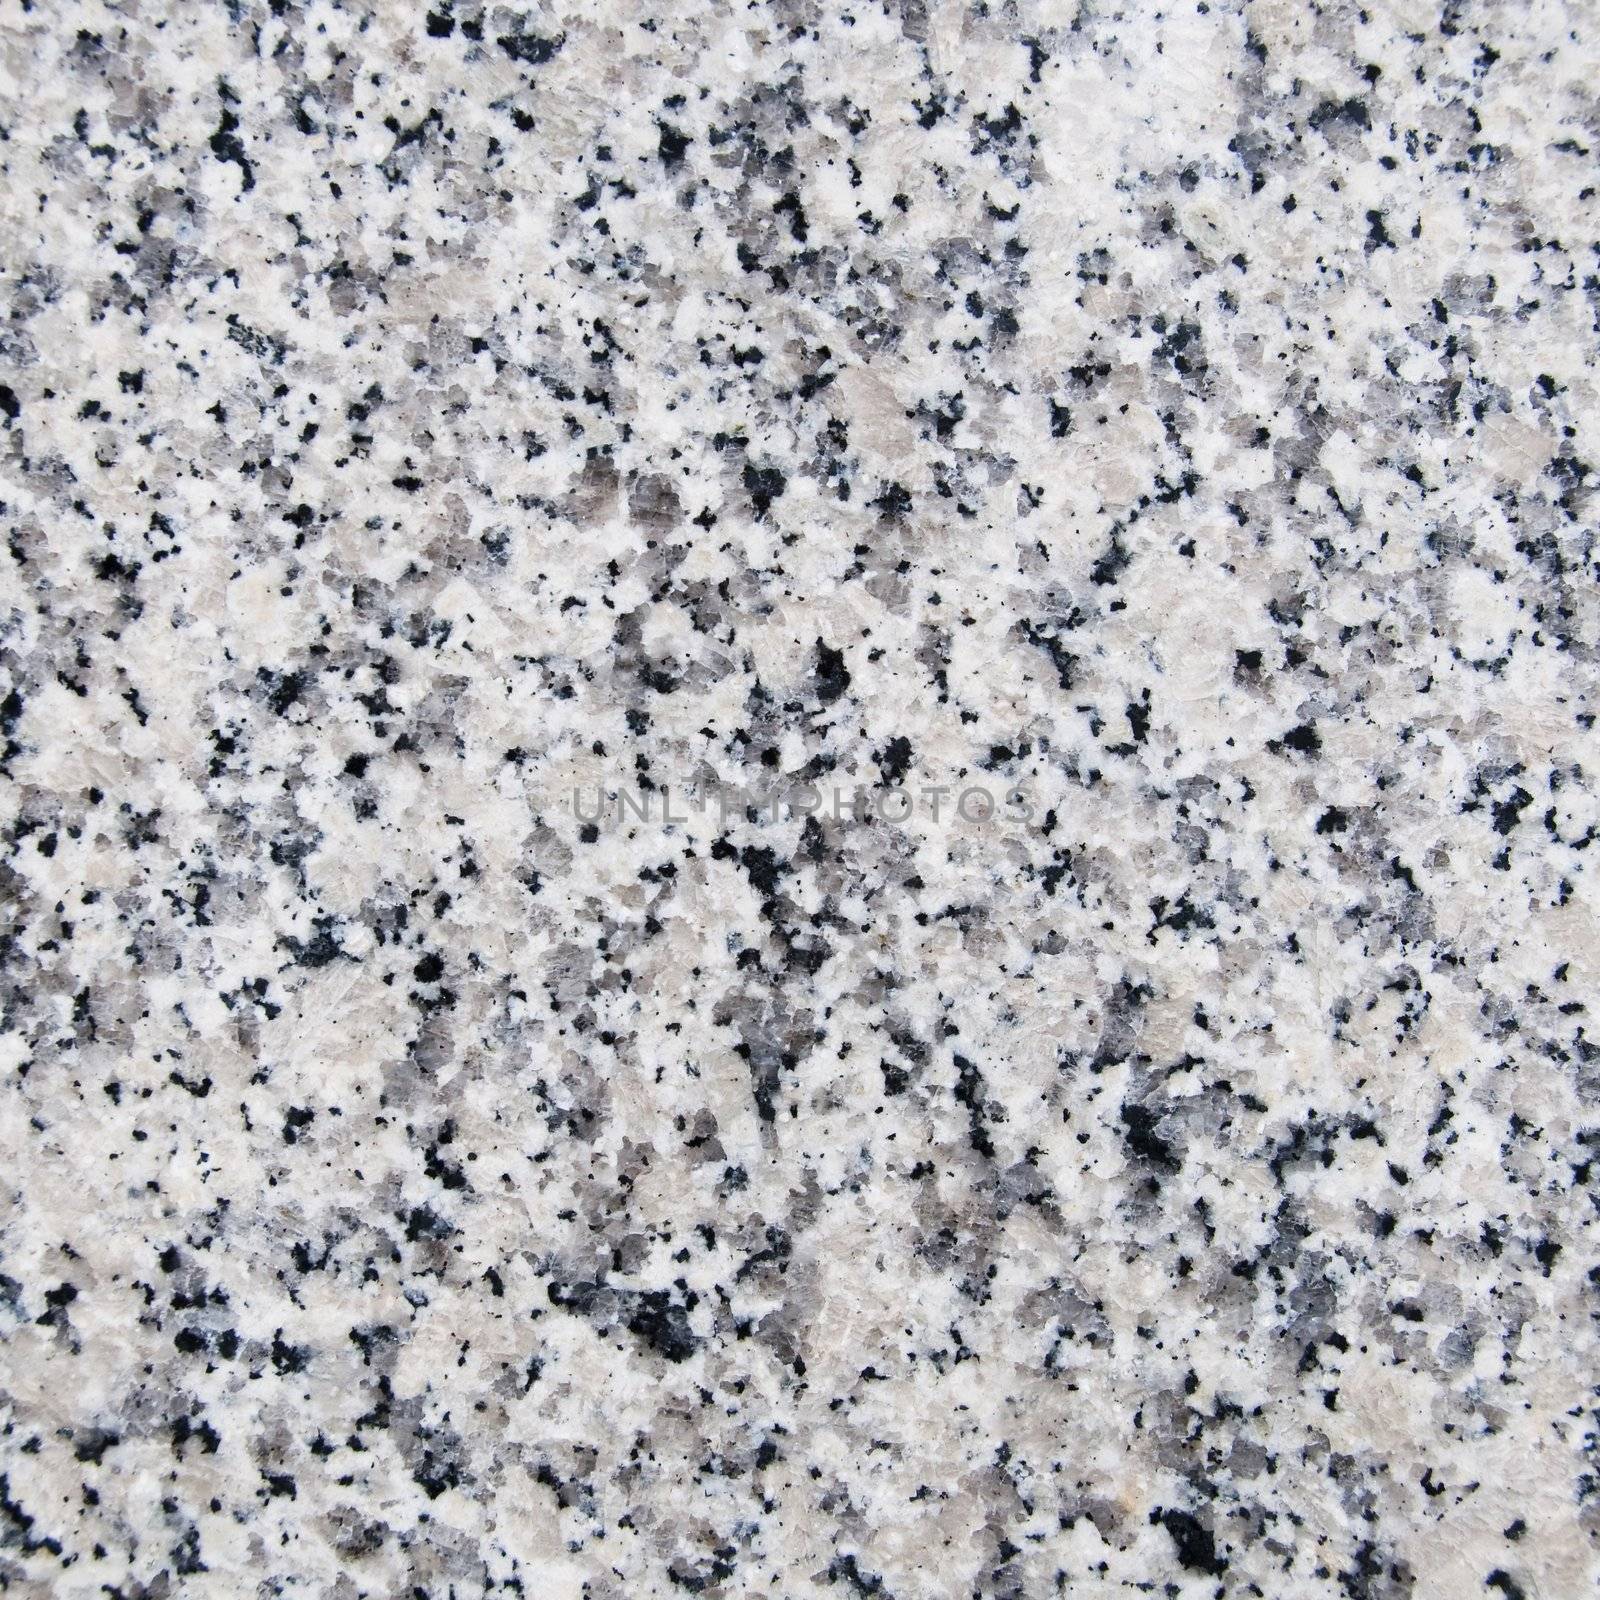 Granite background by dutourdumonde